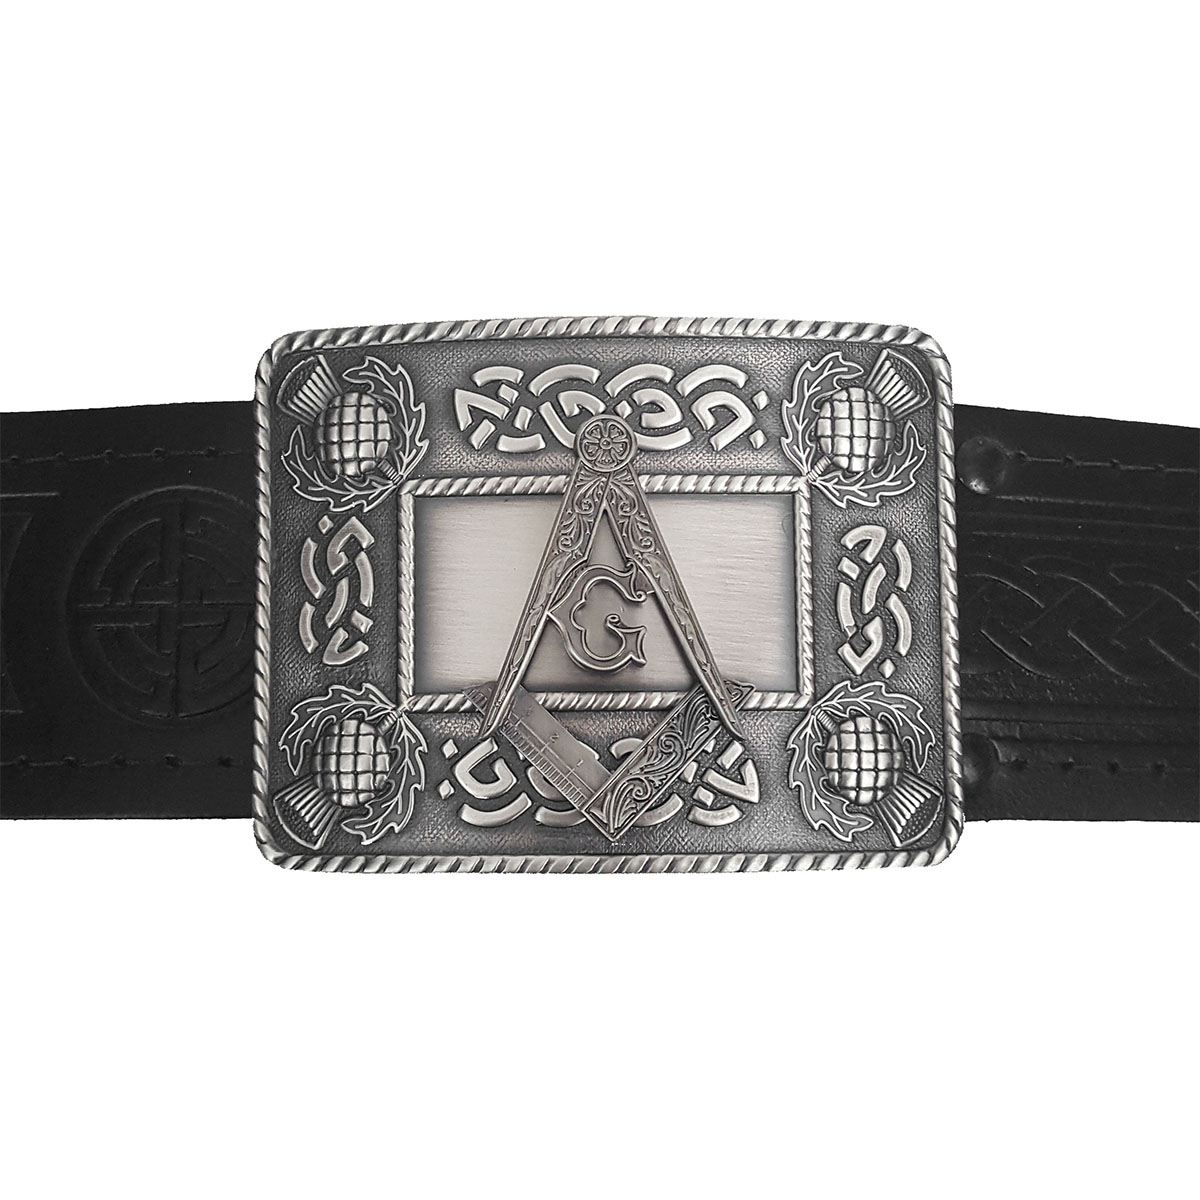 Scottish Kilt Belt Buckle Matt Oval Design with Thistle Badge Antique Finish